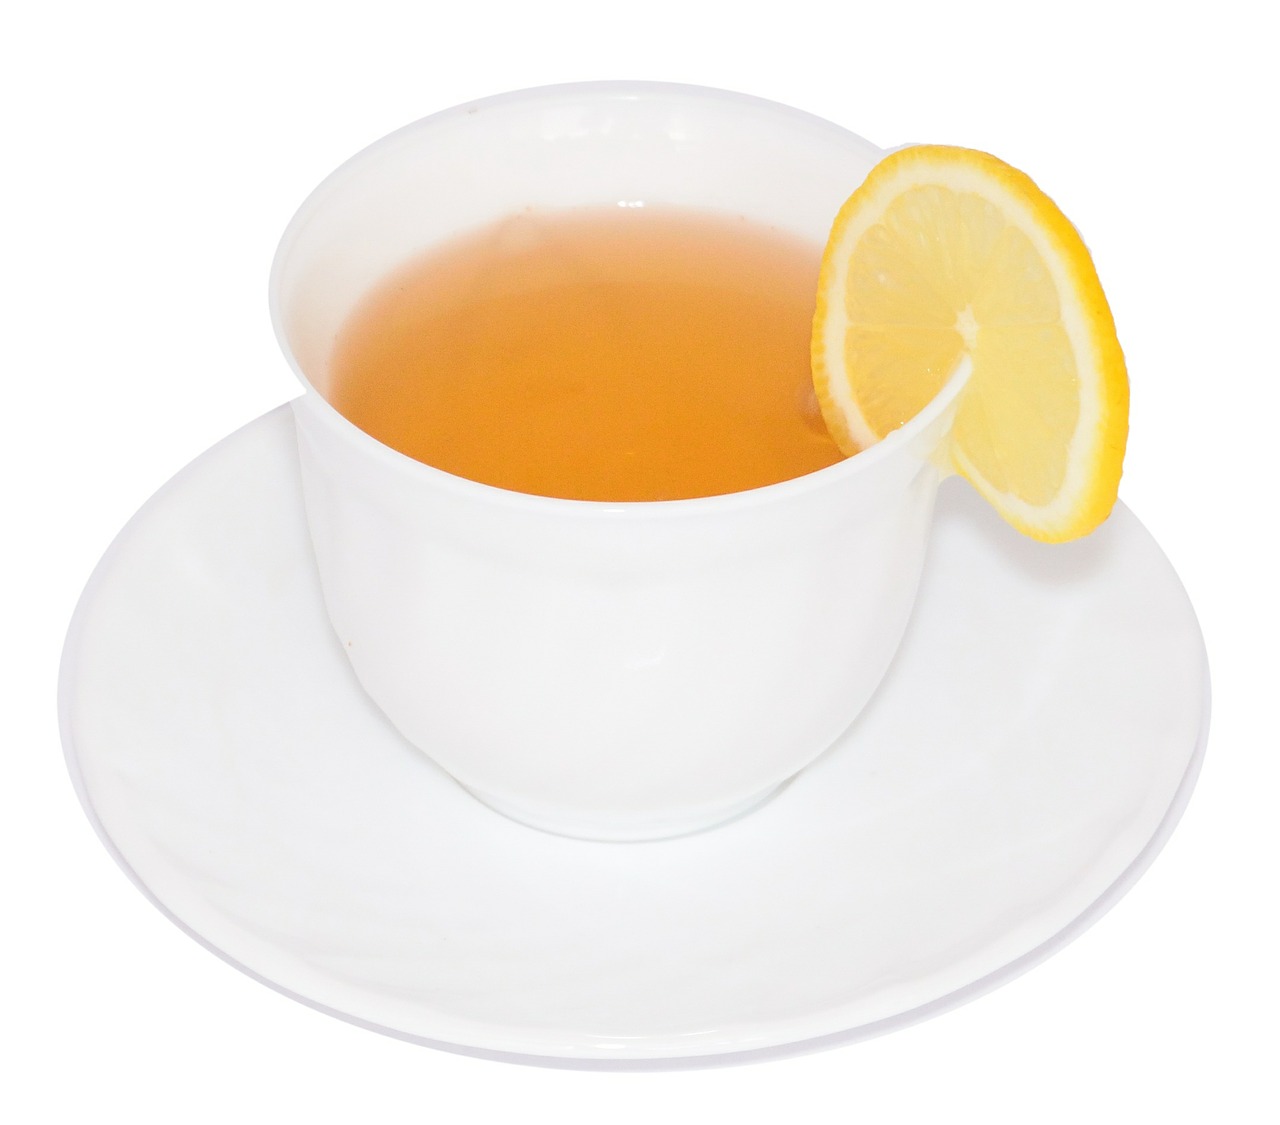 tea lemon the drink free photo